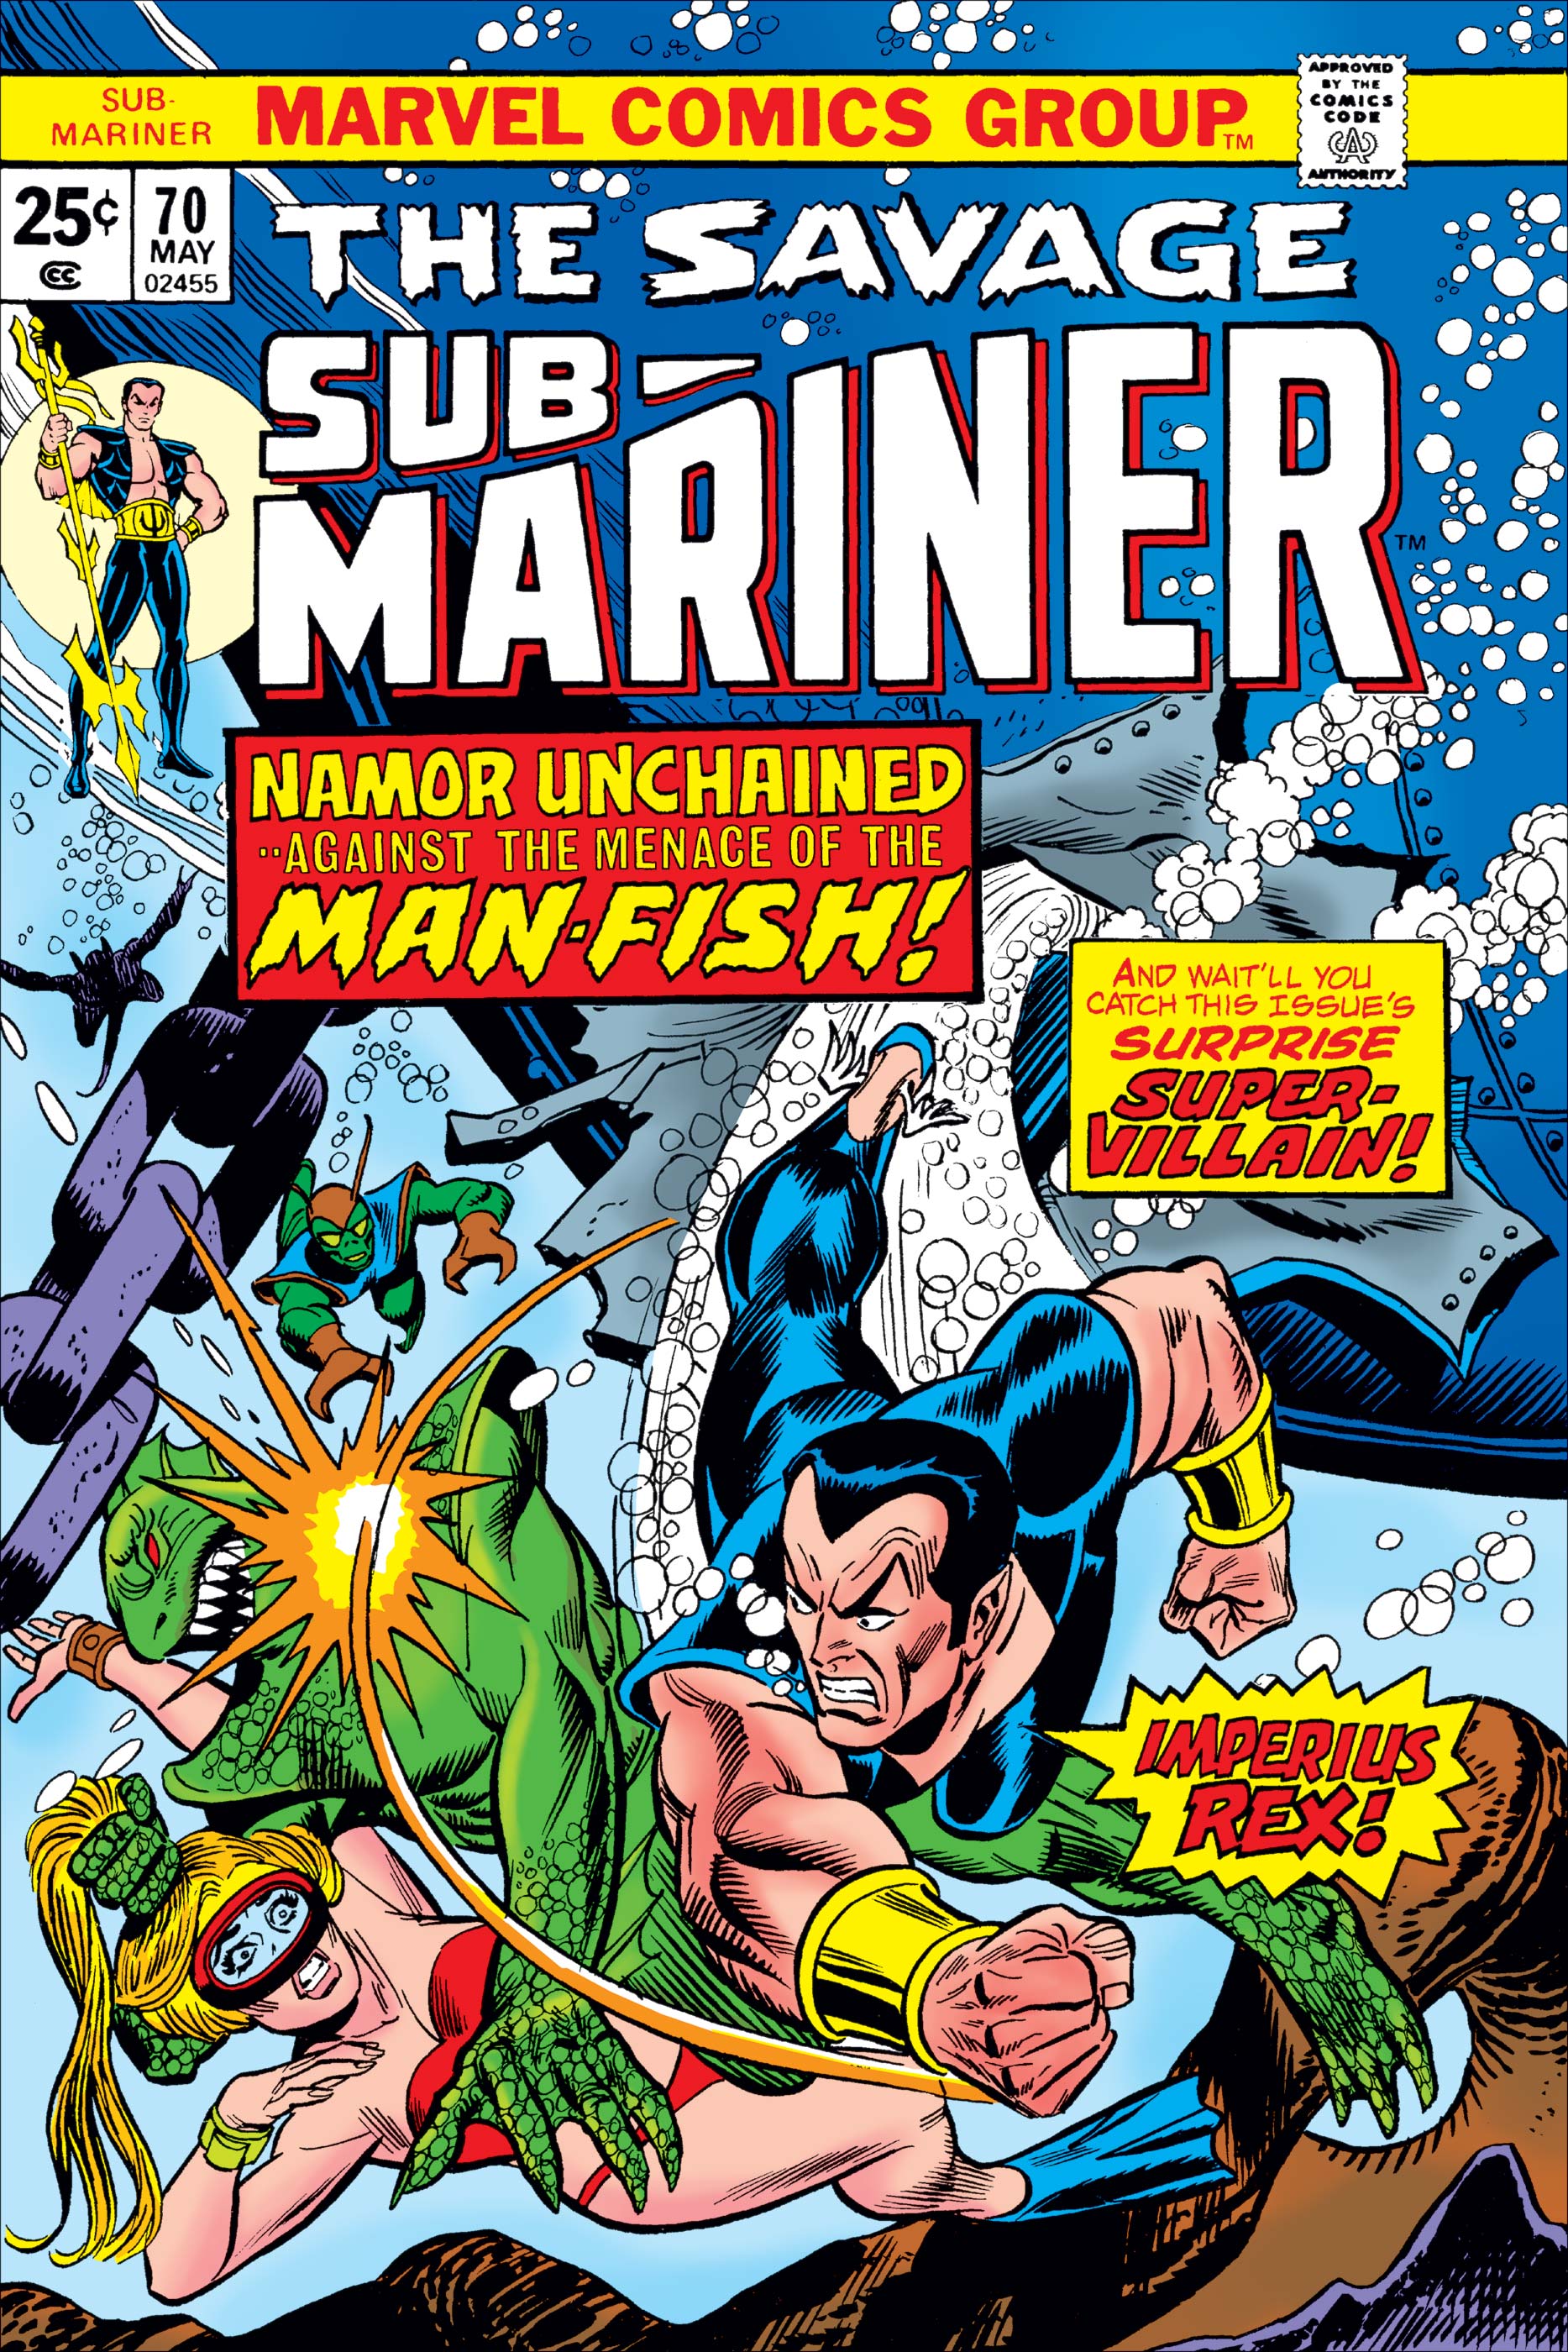 Sub-Mariner (1968) #70